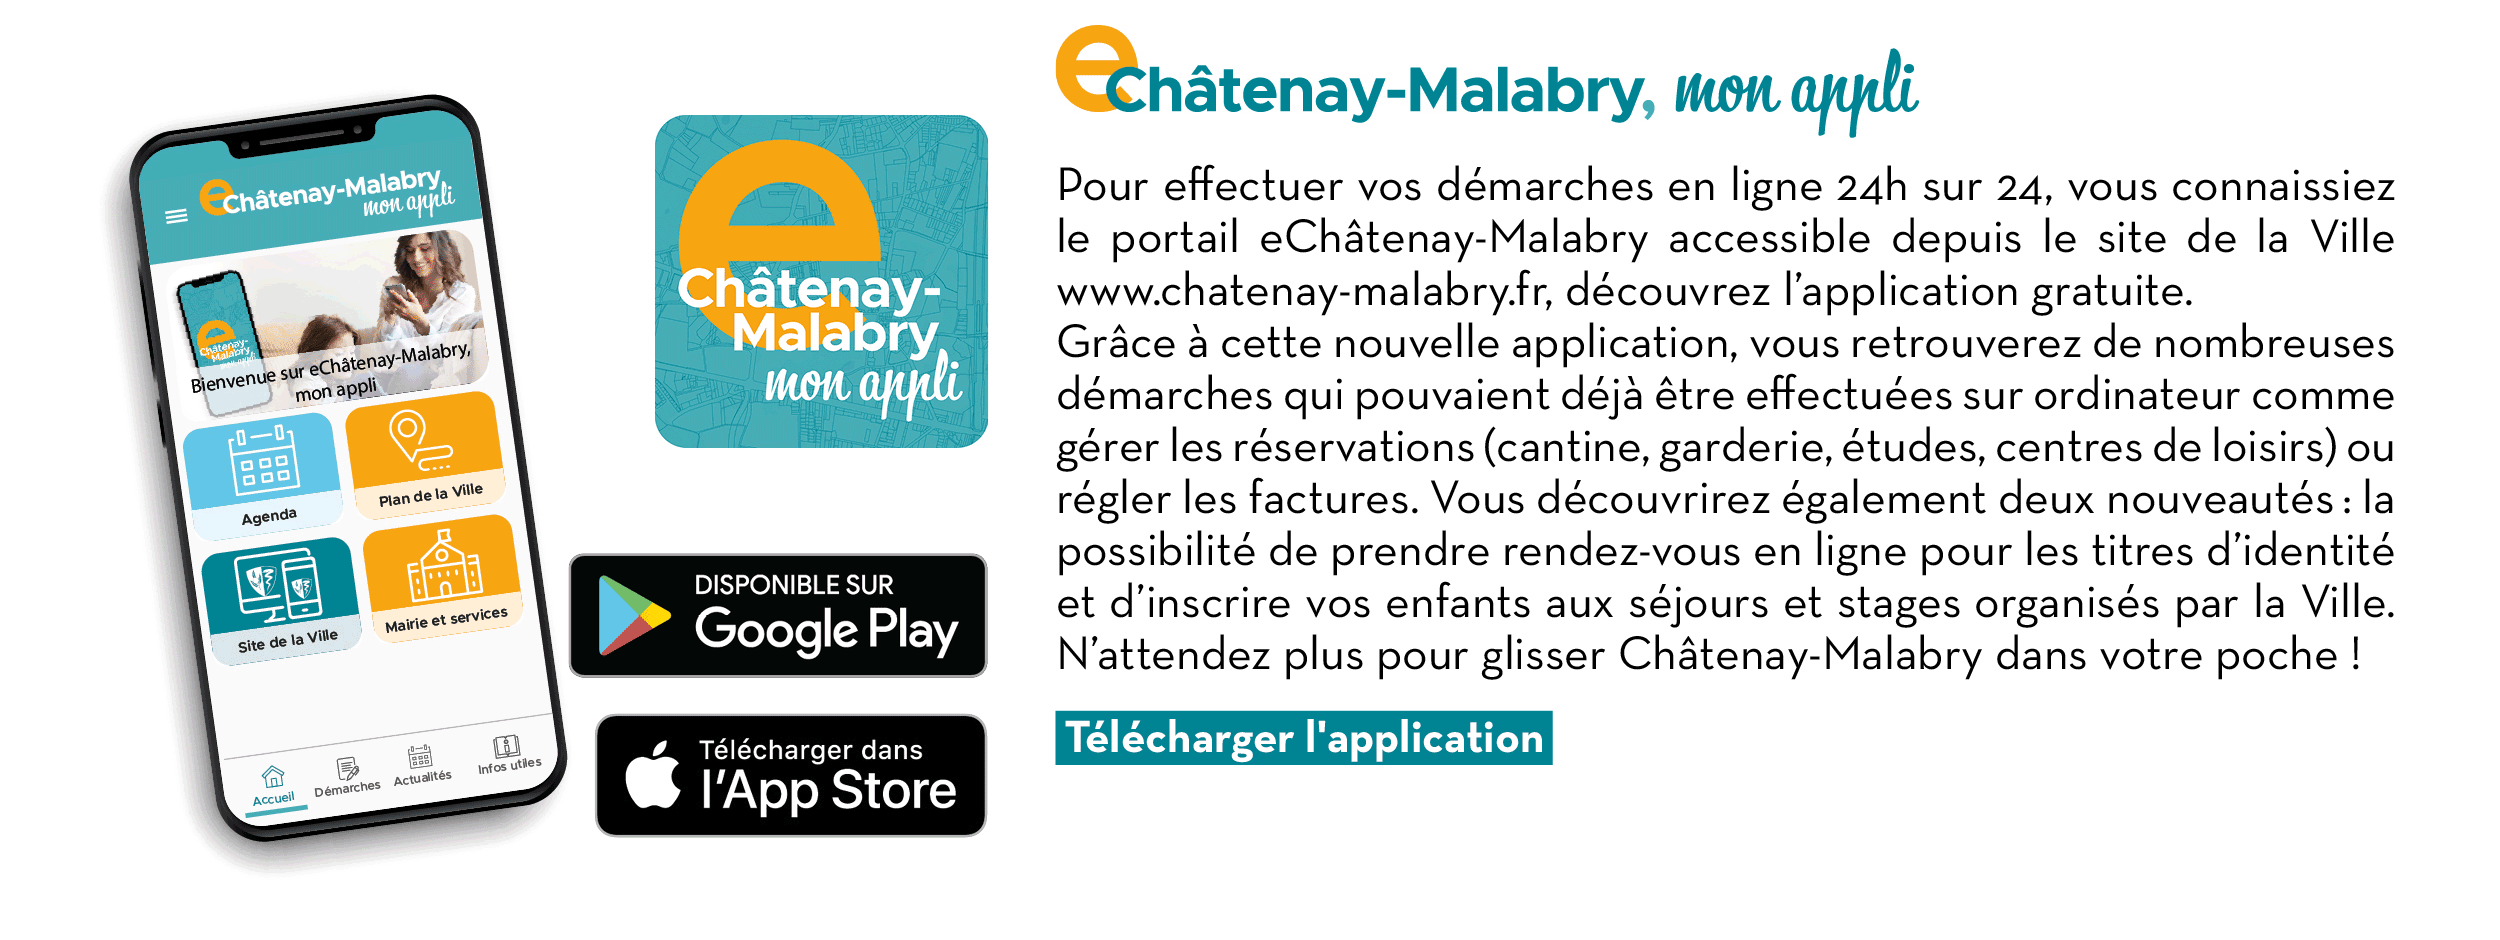 eChâtenay-Malabry, mon appli